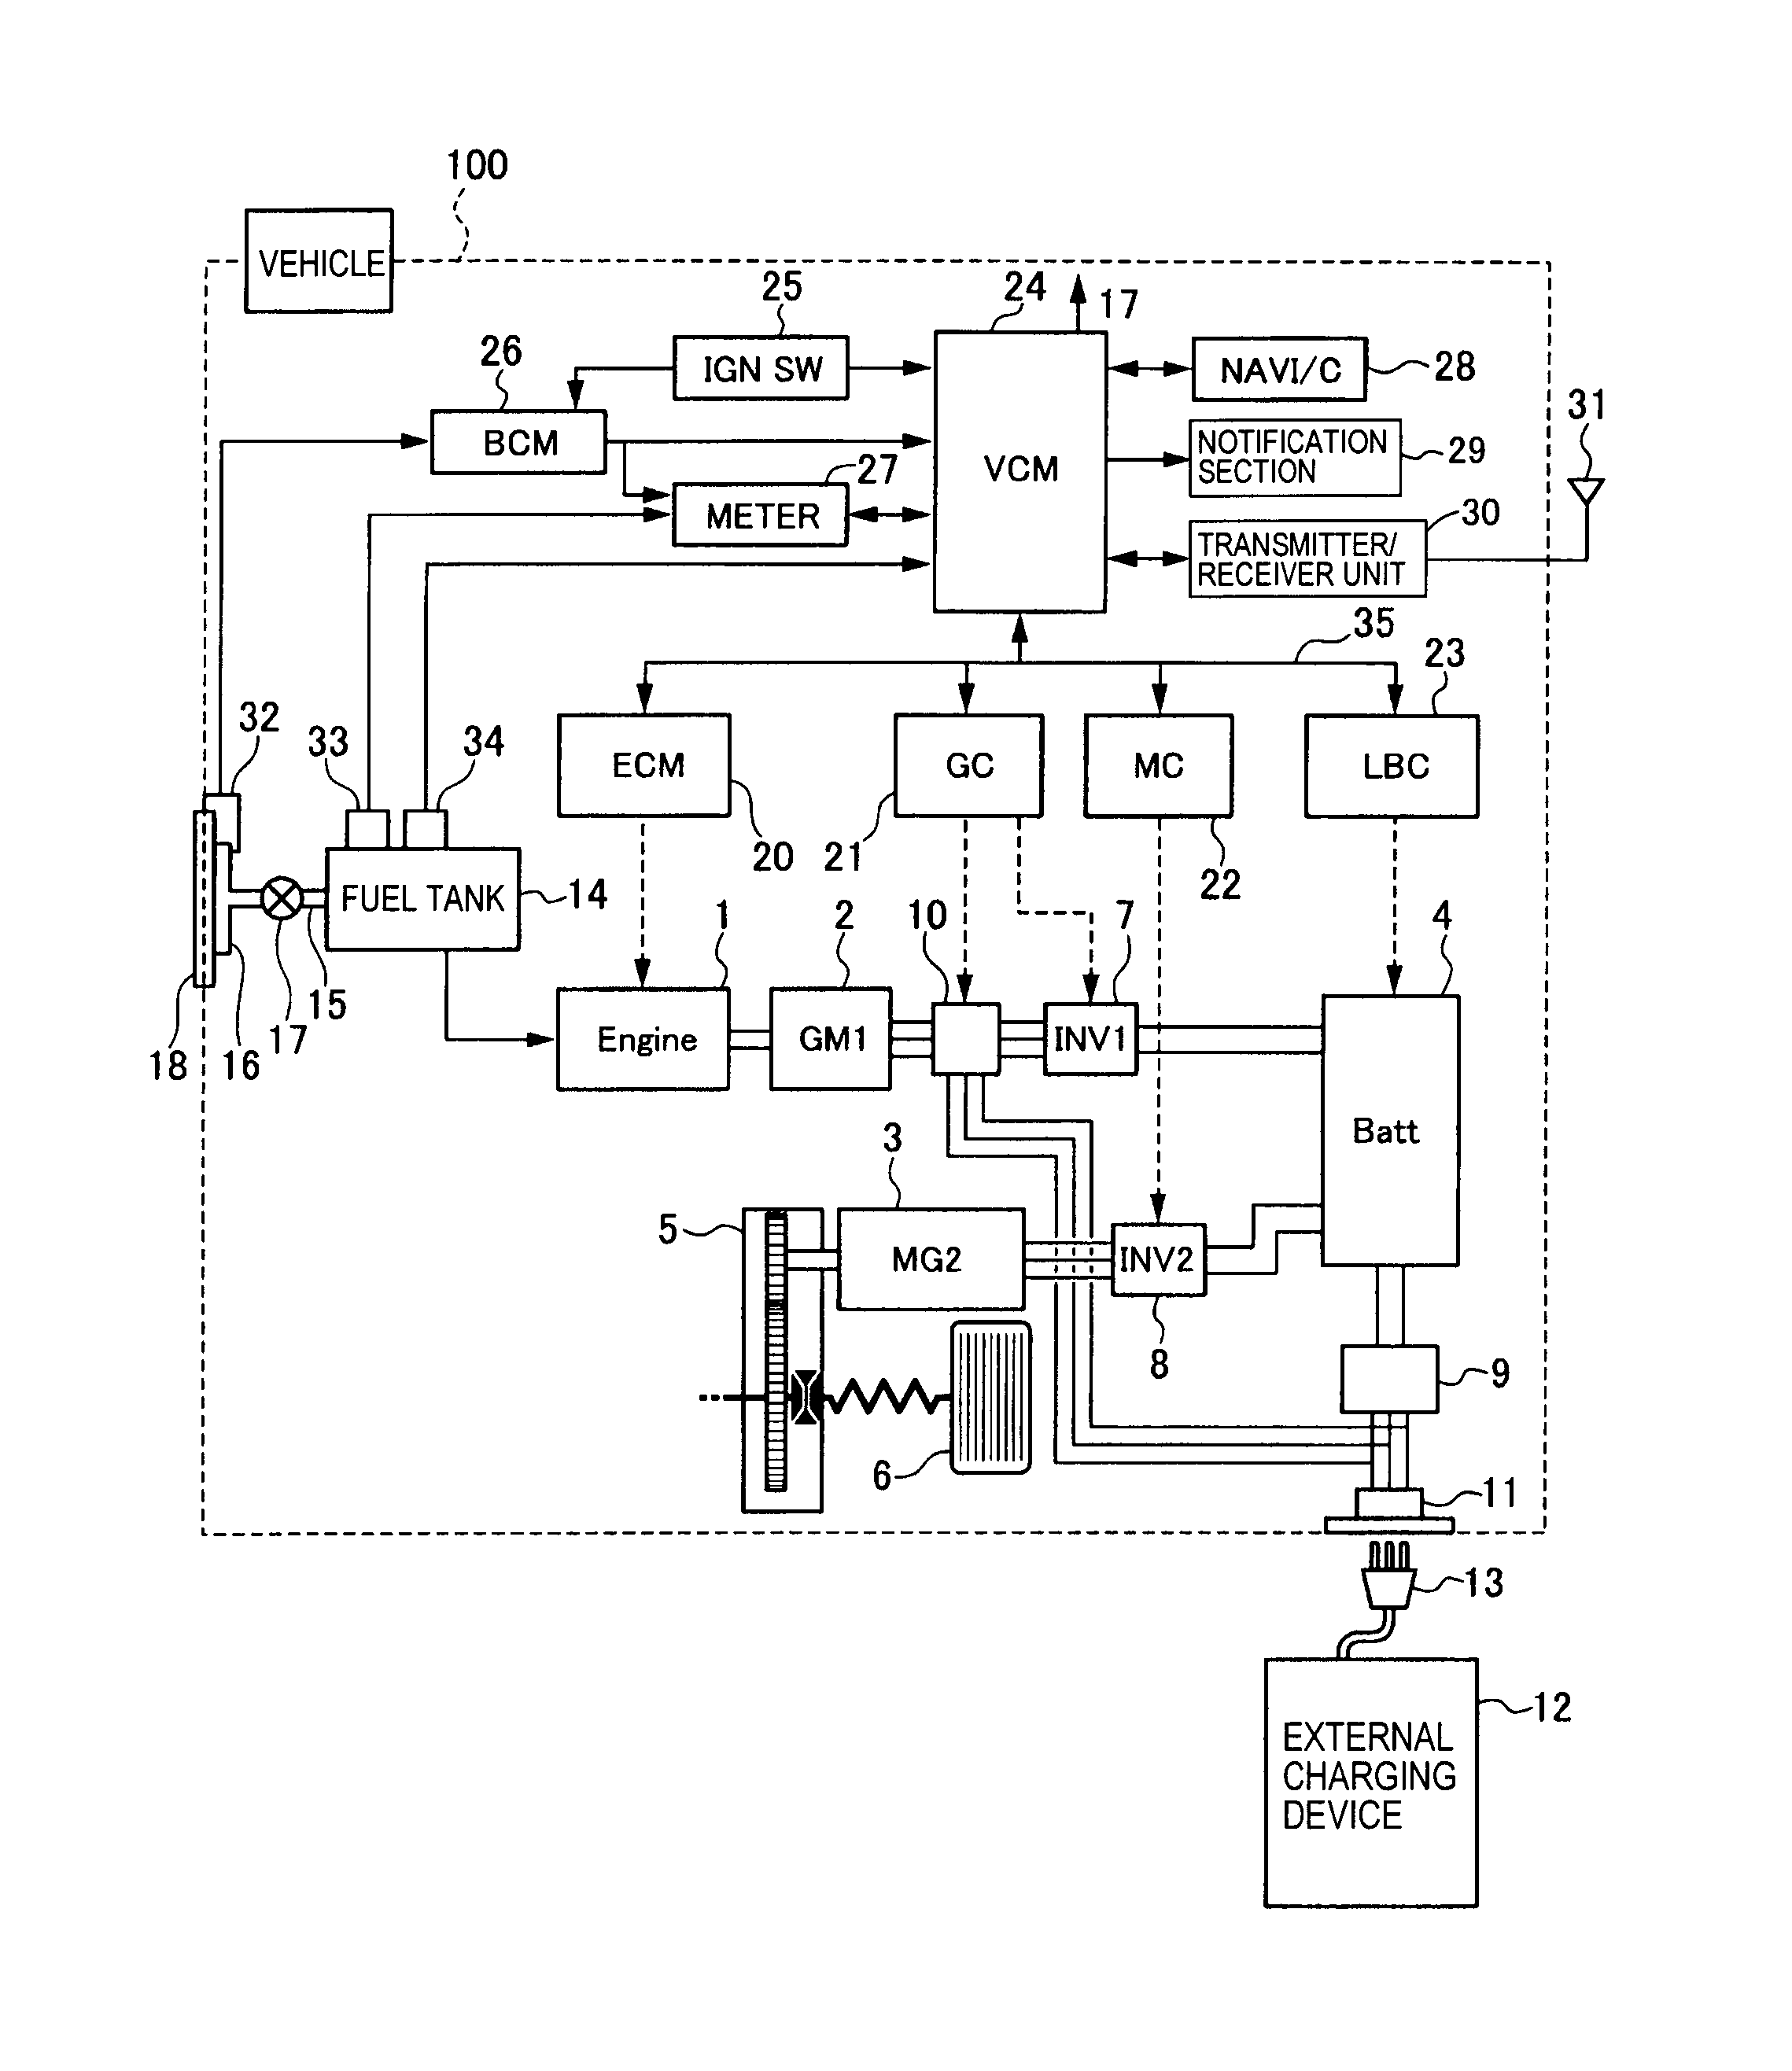 belimo tfb120-s wiring diagram